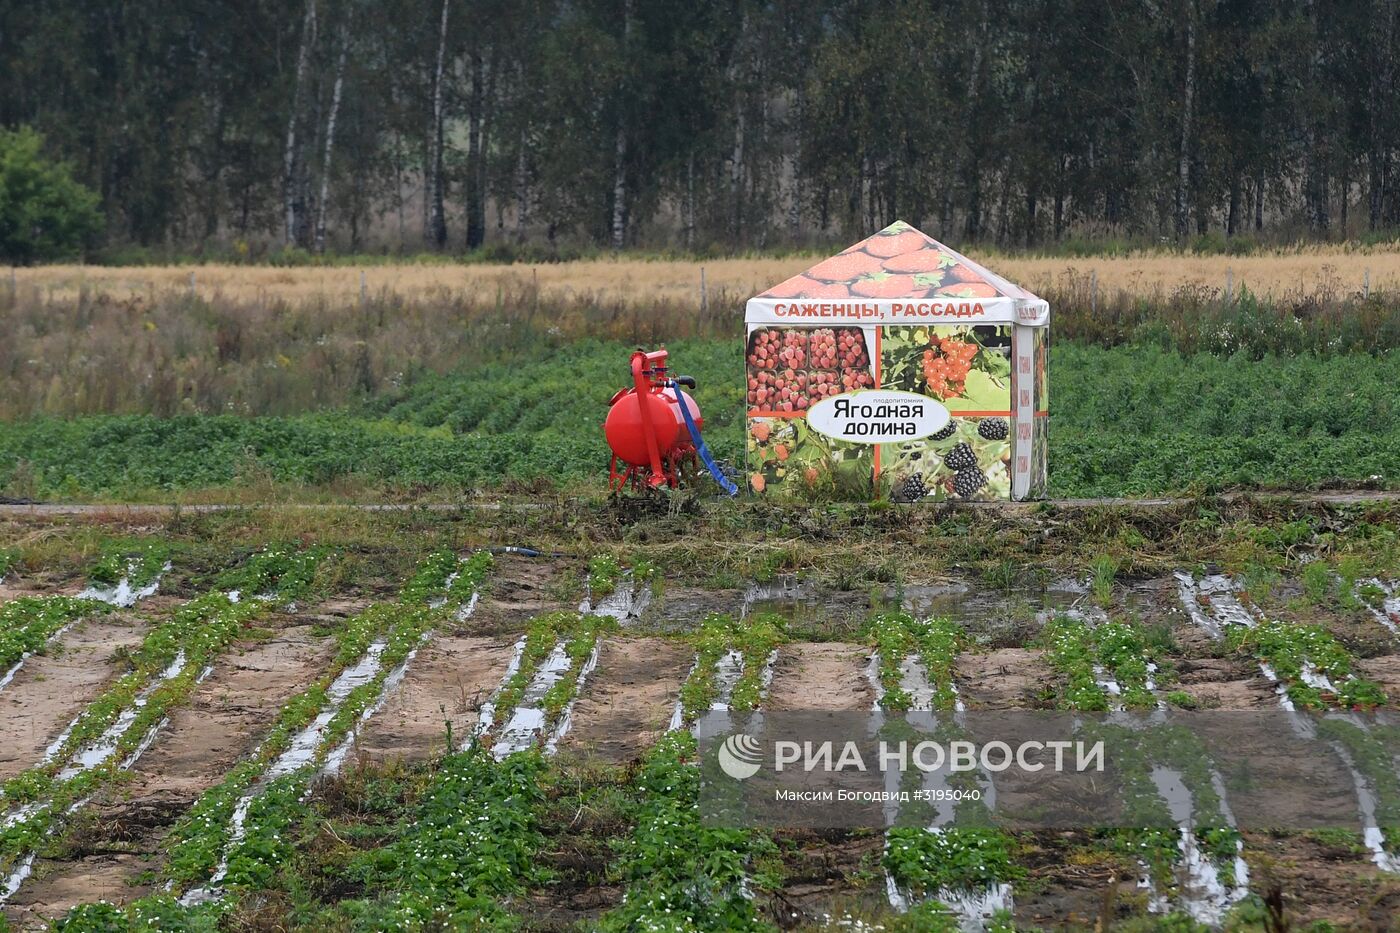 Сбор клубники и малины в Татарстане